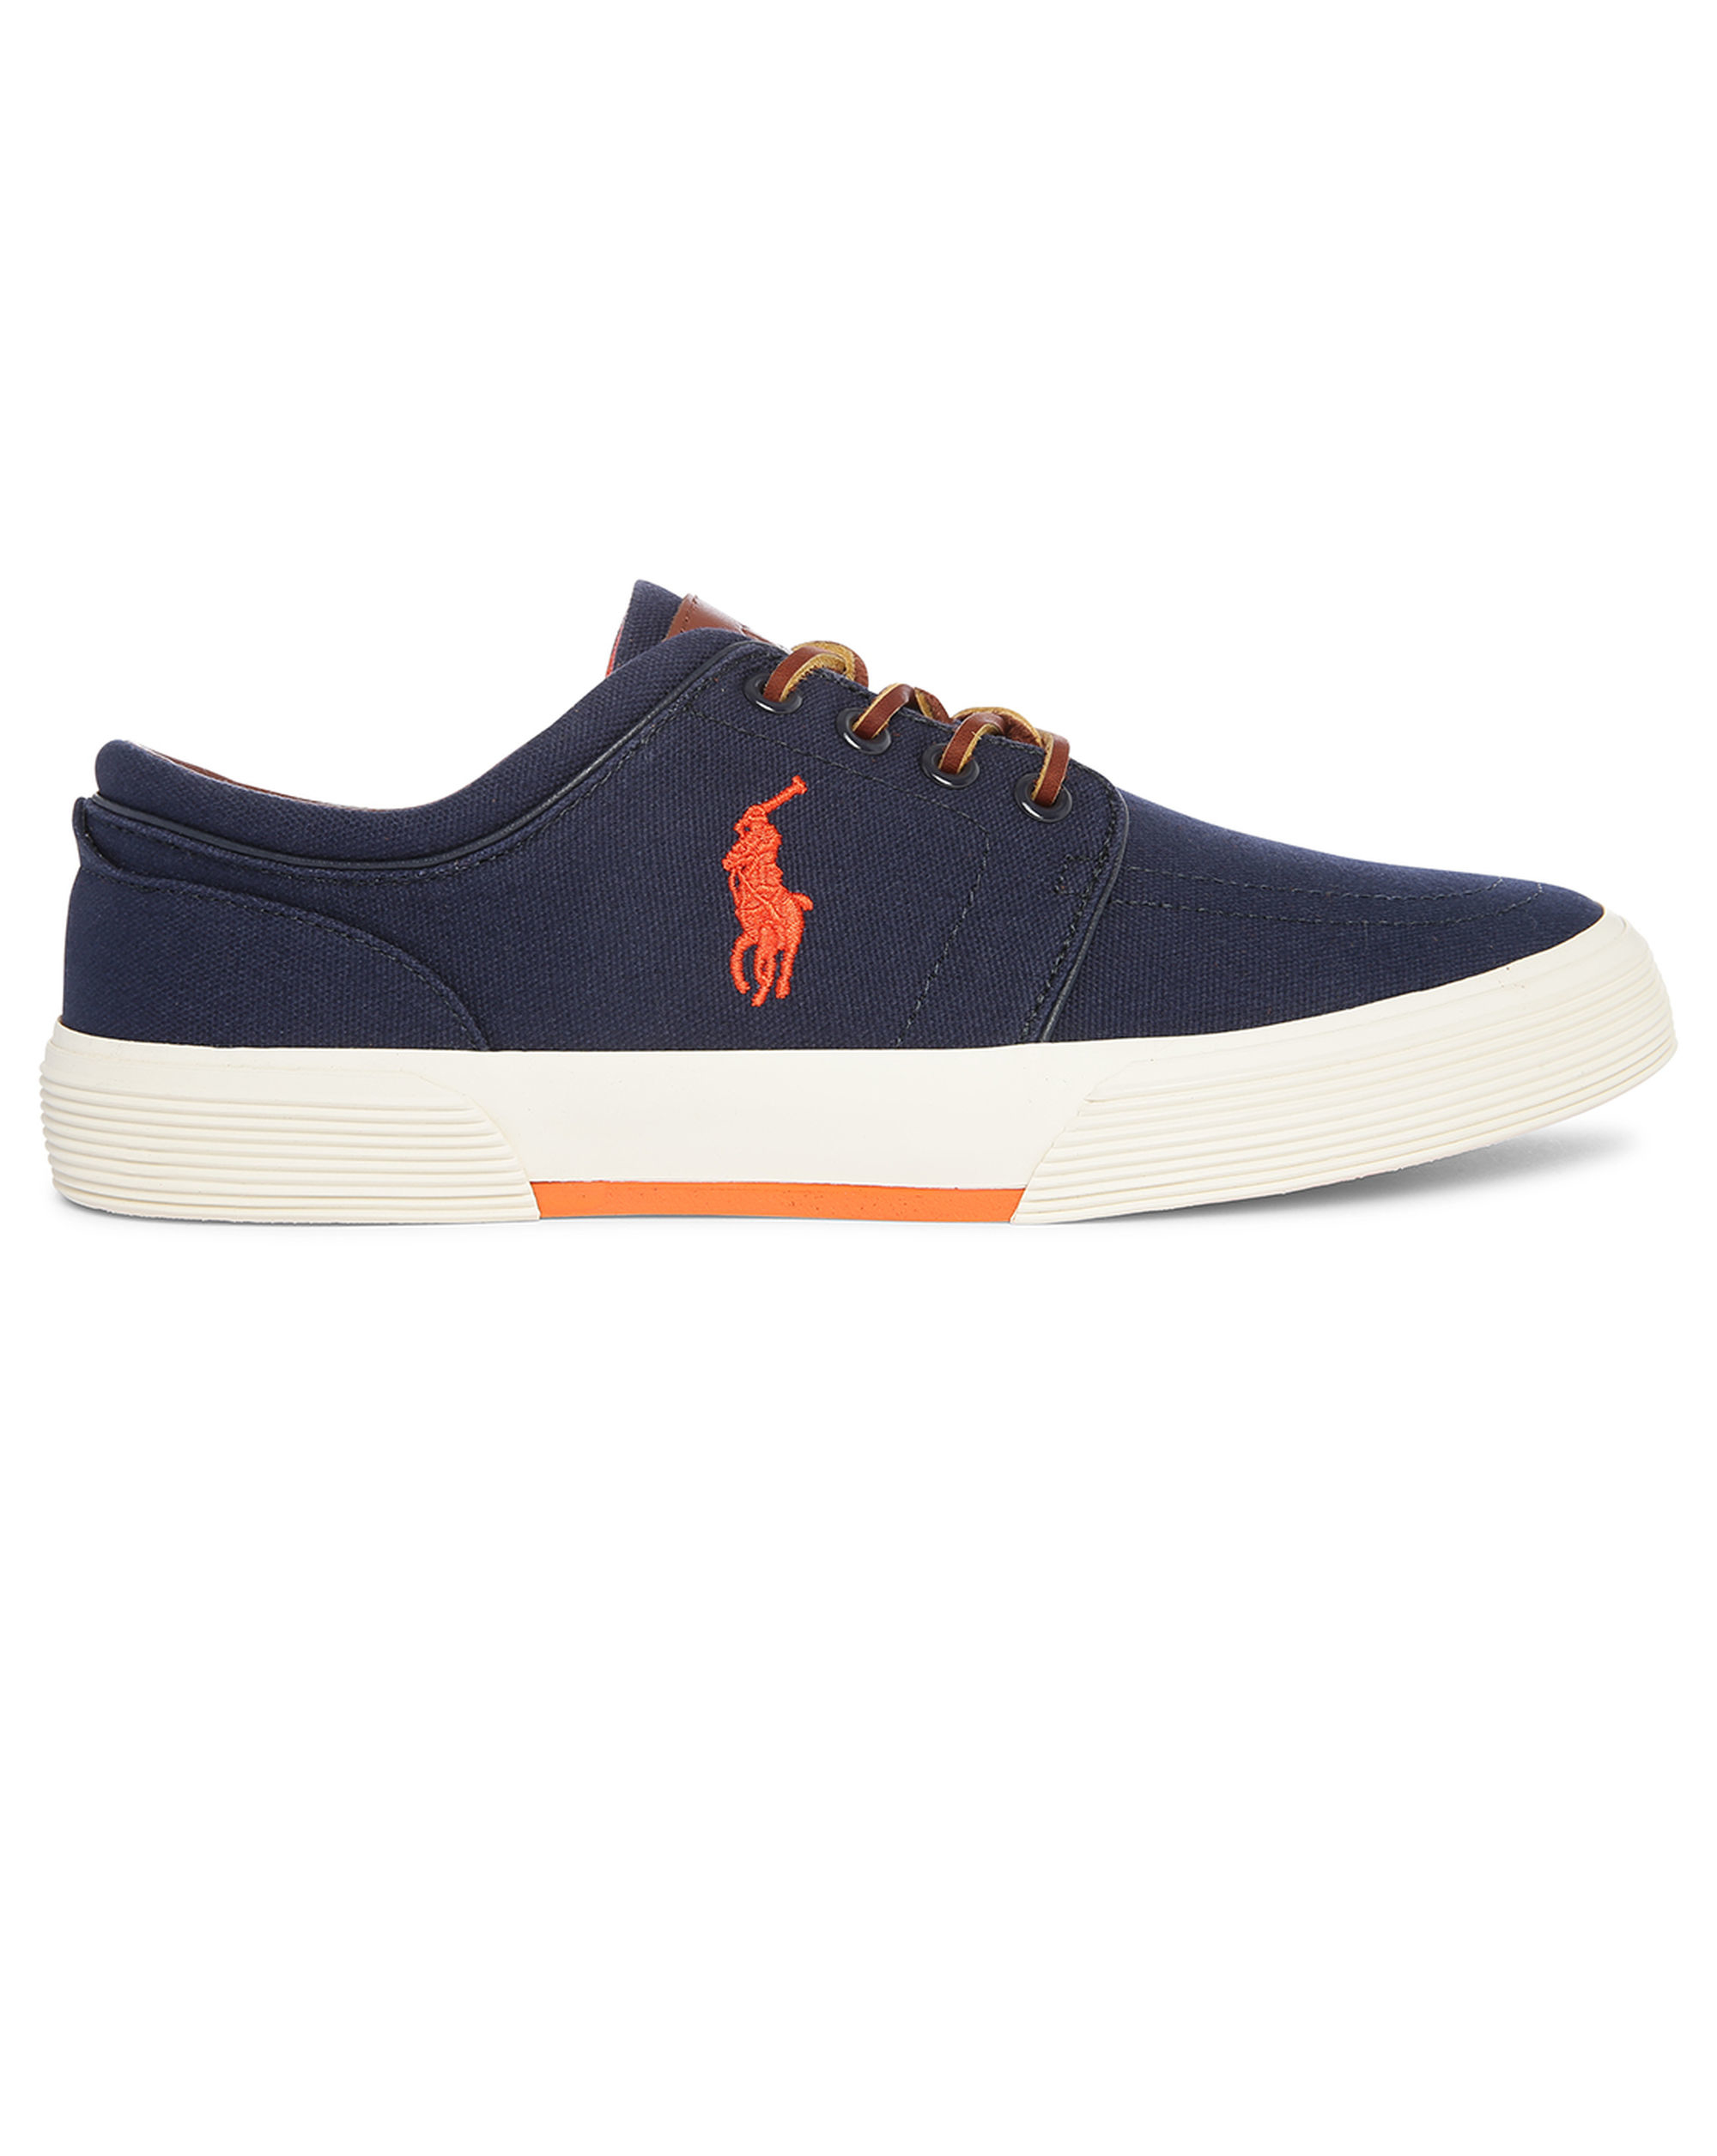 Polo ralph lauren Navy Faxon Canvas Sneakers With Orange Contrast in ...